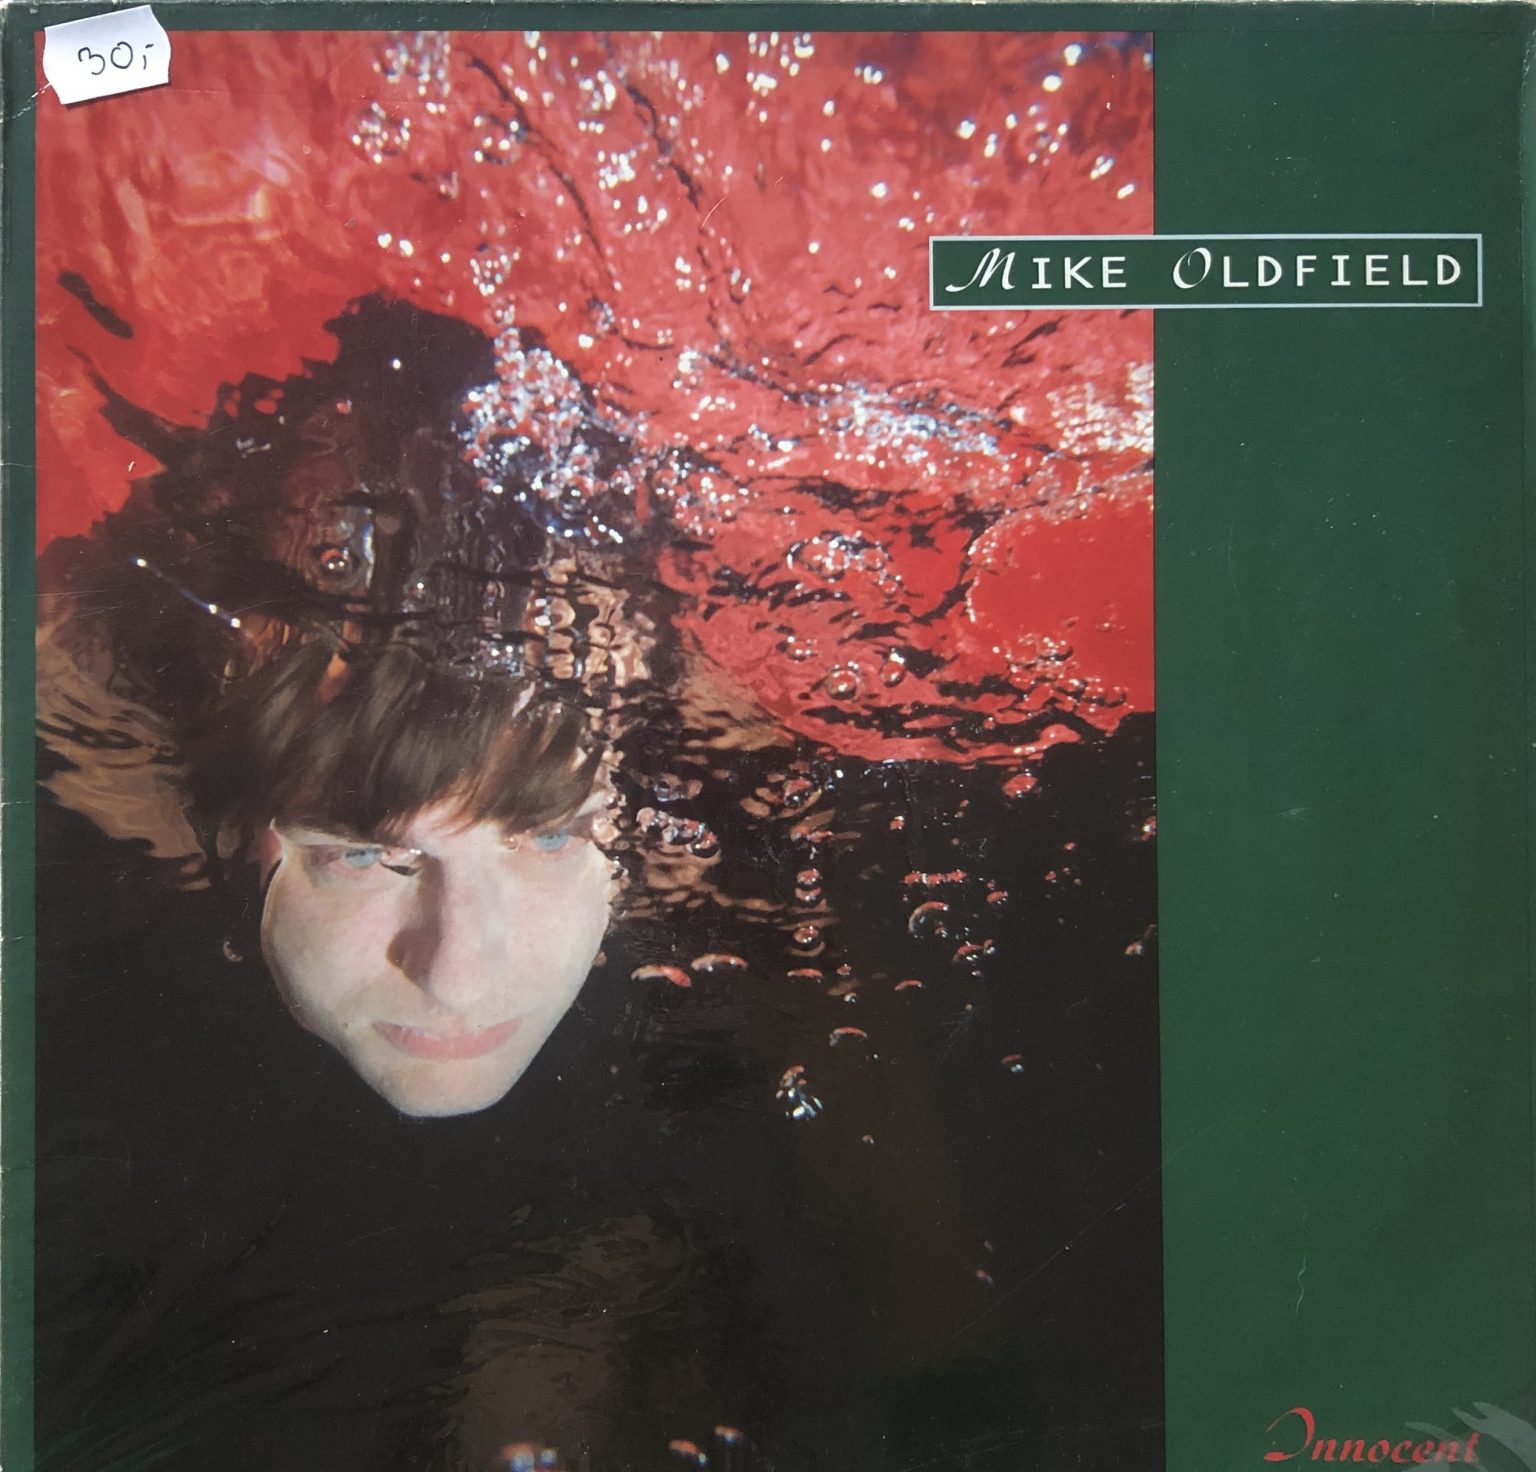 Mike Oldfield – Innocent LP